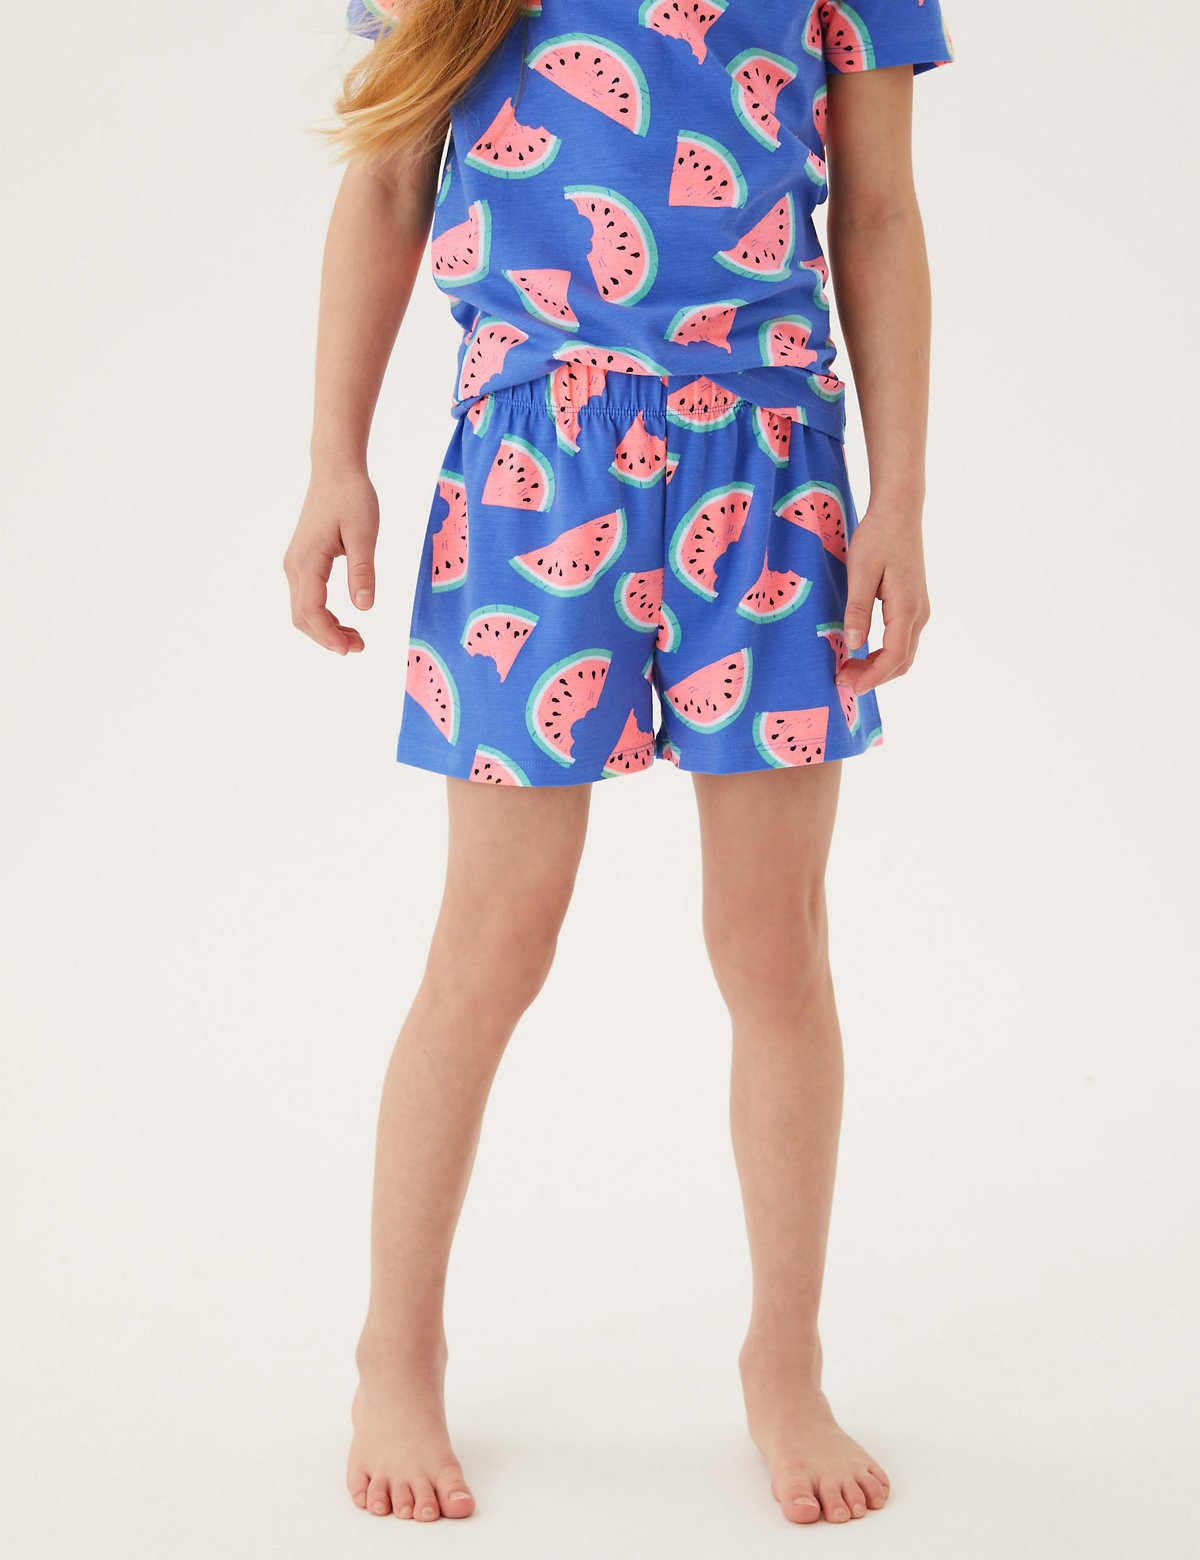 Cotton Rich Watermelon Short Pyjama (7-16 Yrs)